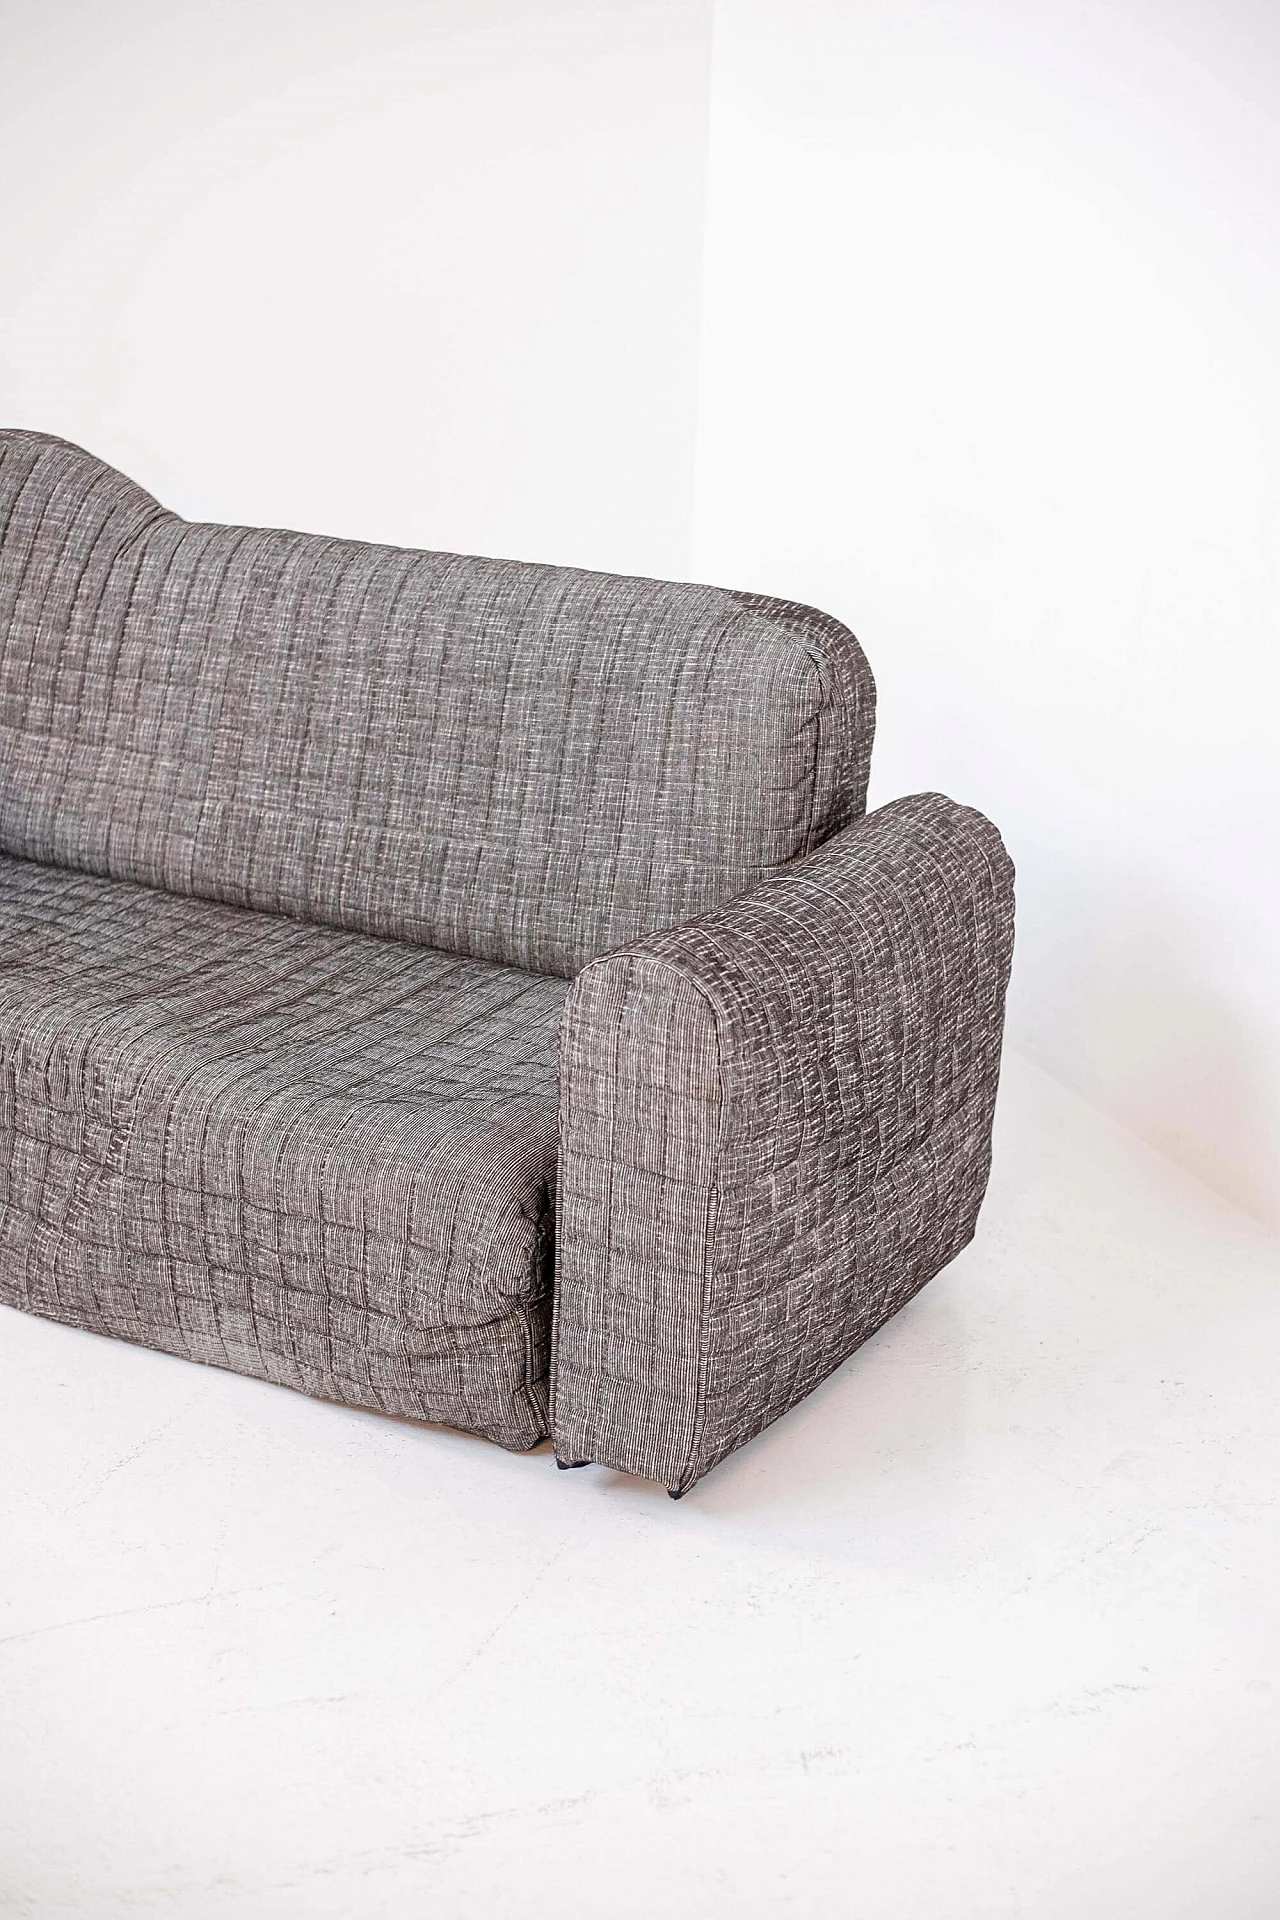 Cannaregio grey fabric sofa by Gaetano Pesce for Cassina, 1980s 1383733